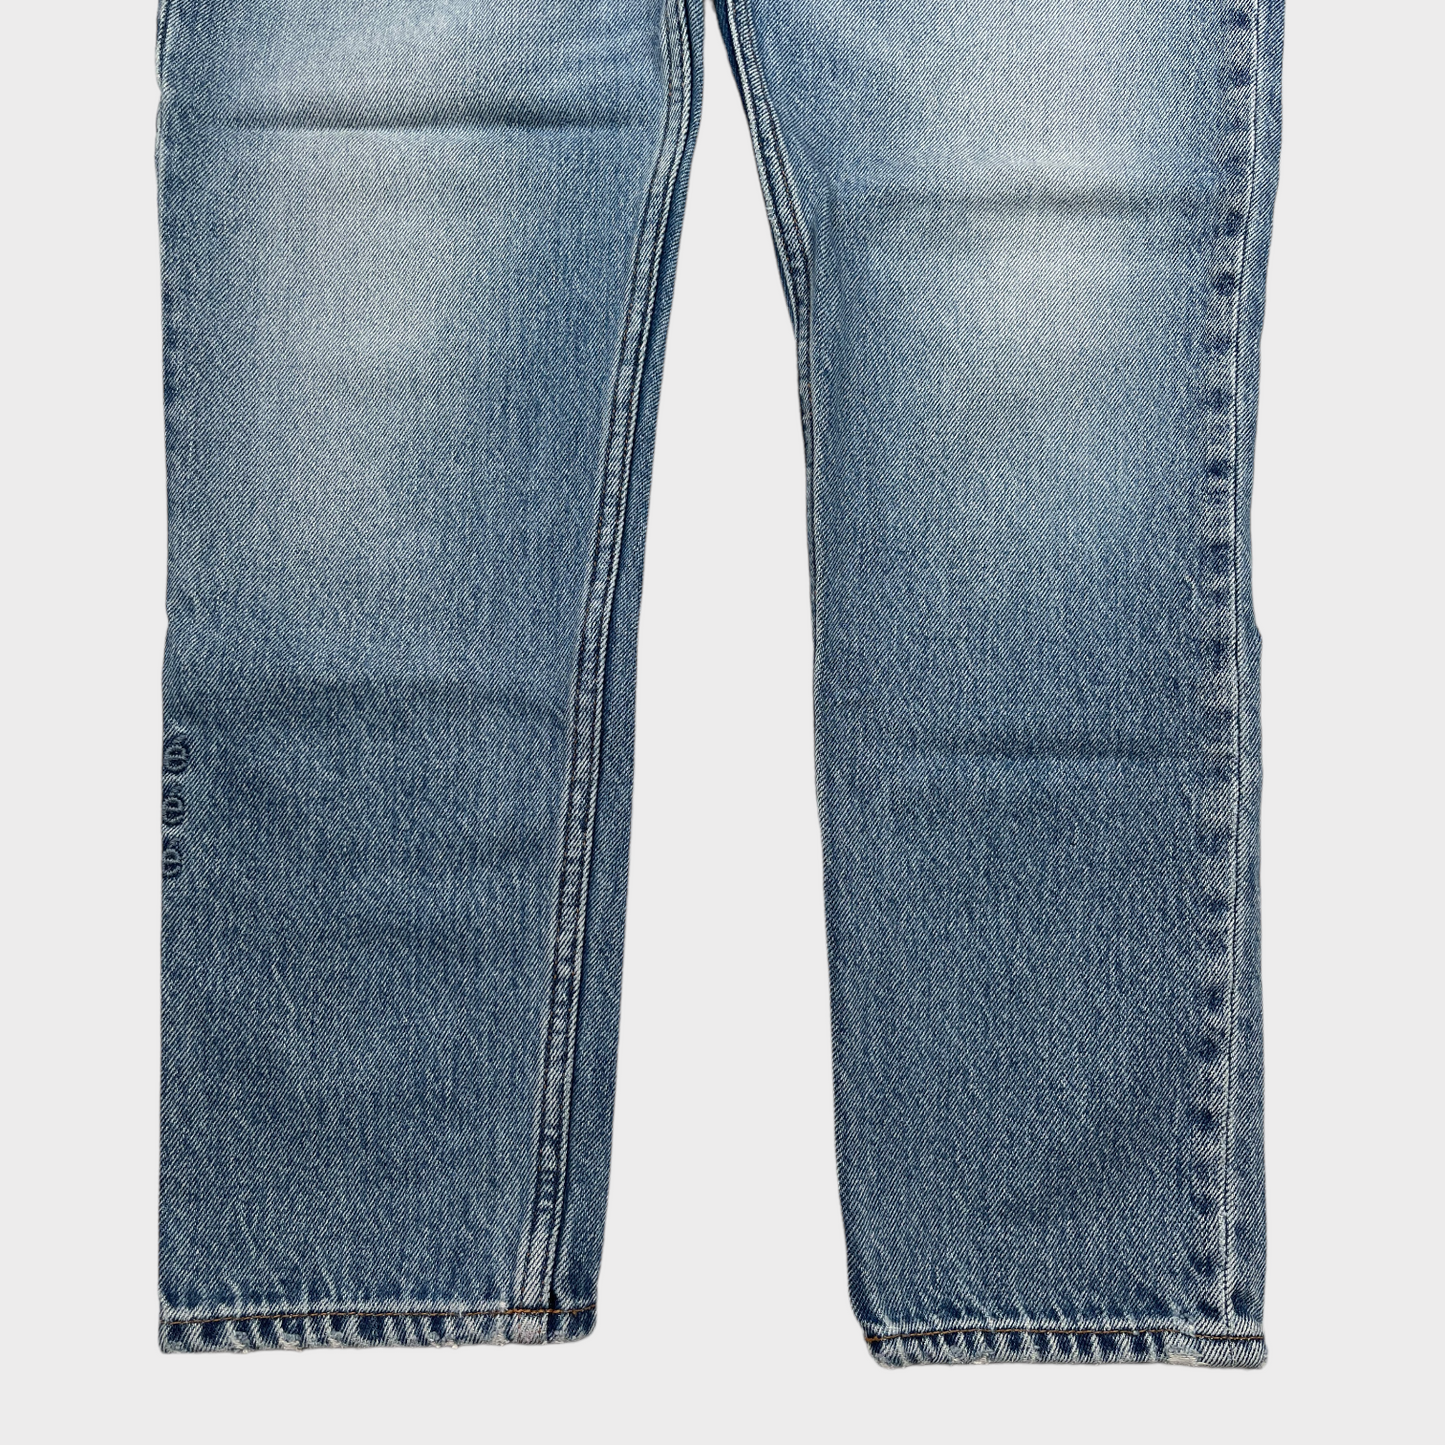 ETICA Alex High Rise Vintage Skinny Jeans In Cottonwood Creek Women's Size 26